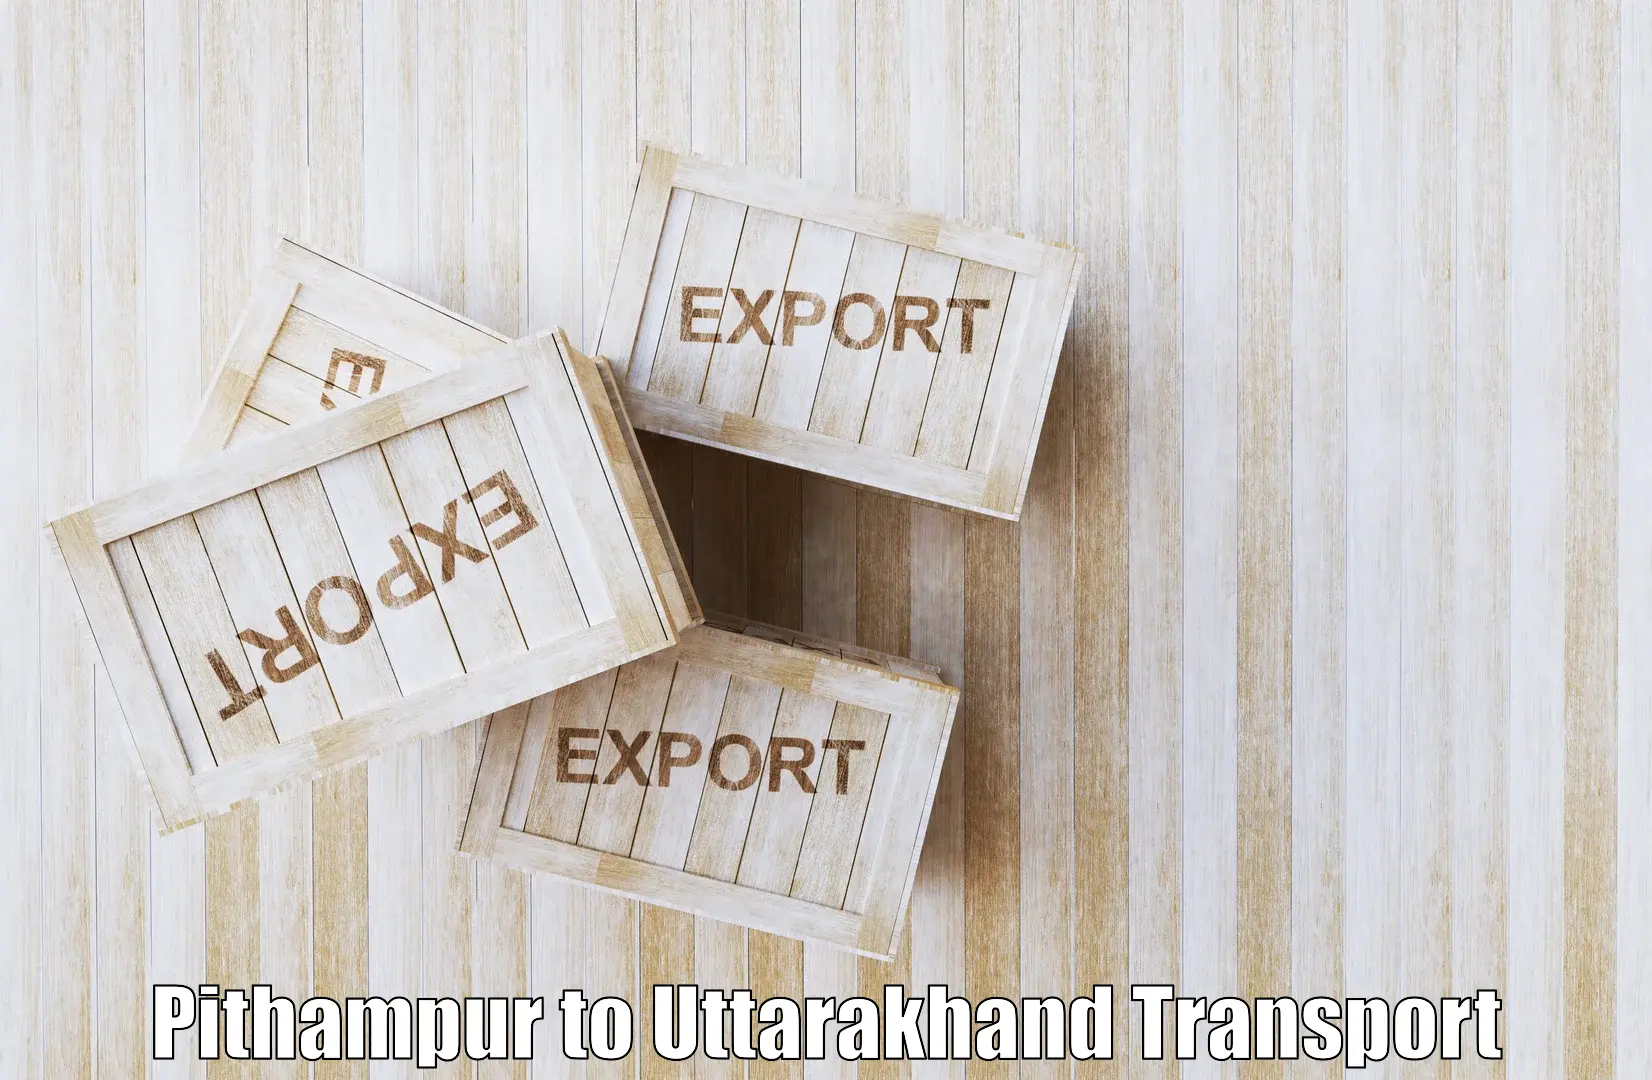 Shipping partner Pithampur to Dehradun